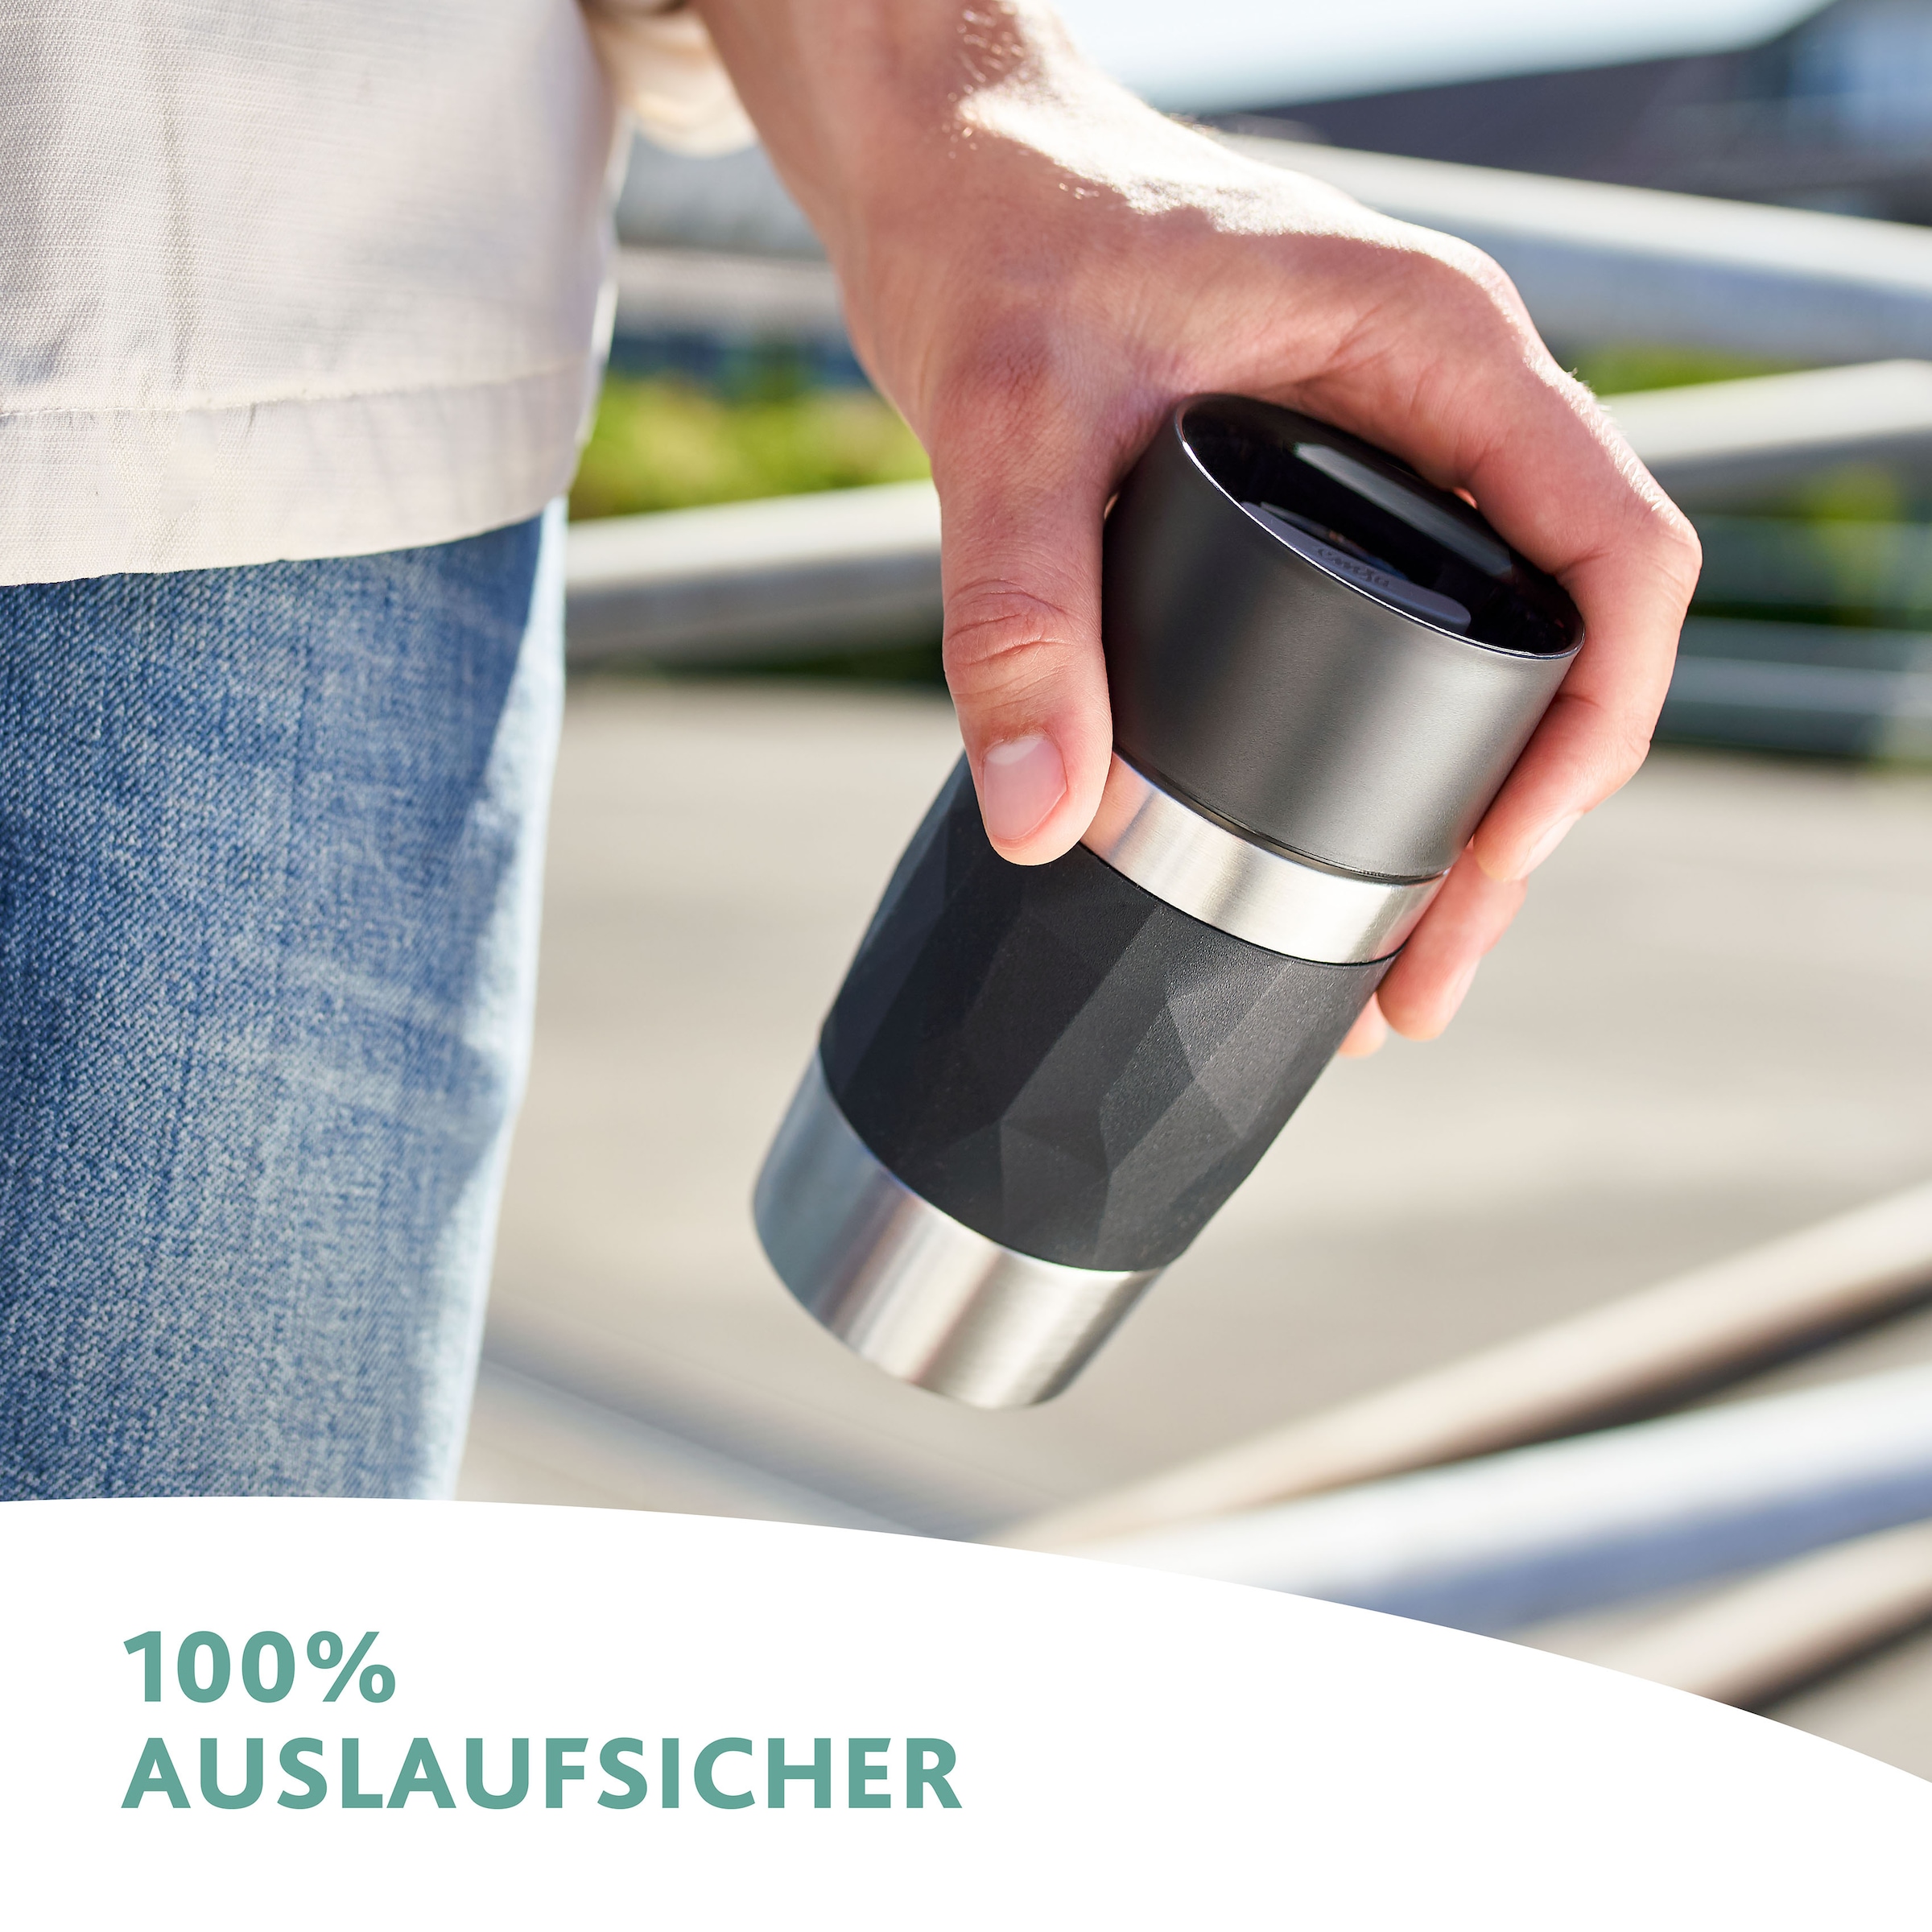 Emsa Thermobecher »Travel Mug Compact«, 0,3L, Edelstahl, 3h warm/6h kalt, 360°Trinköffnung, spülmaschinenfest